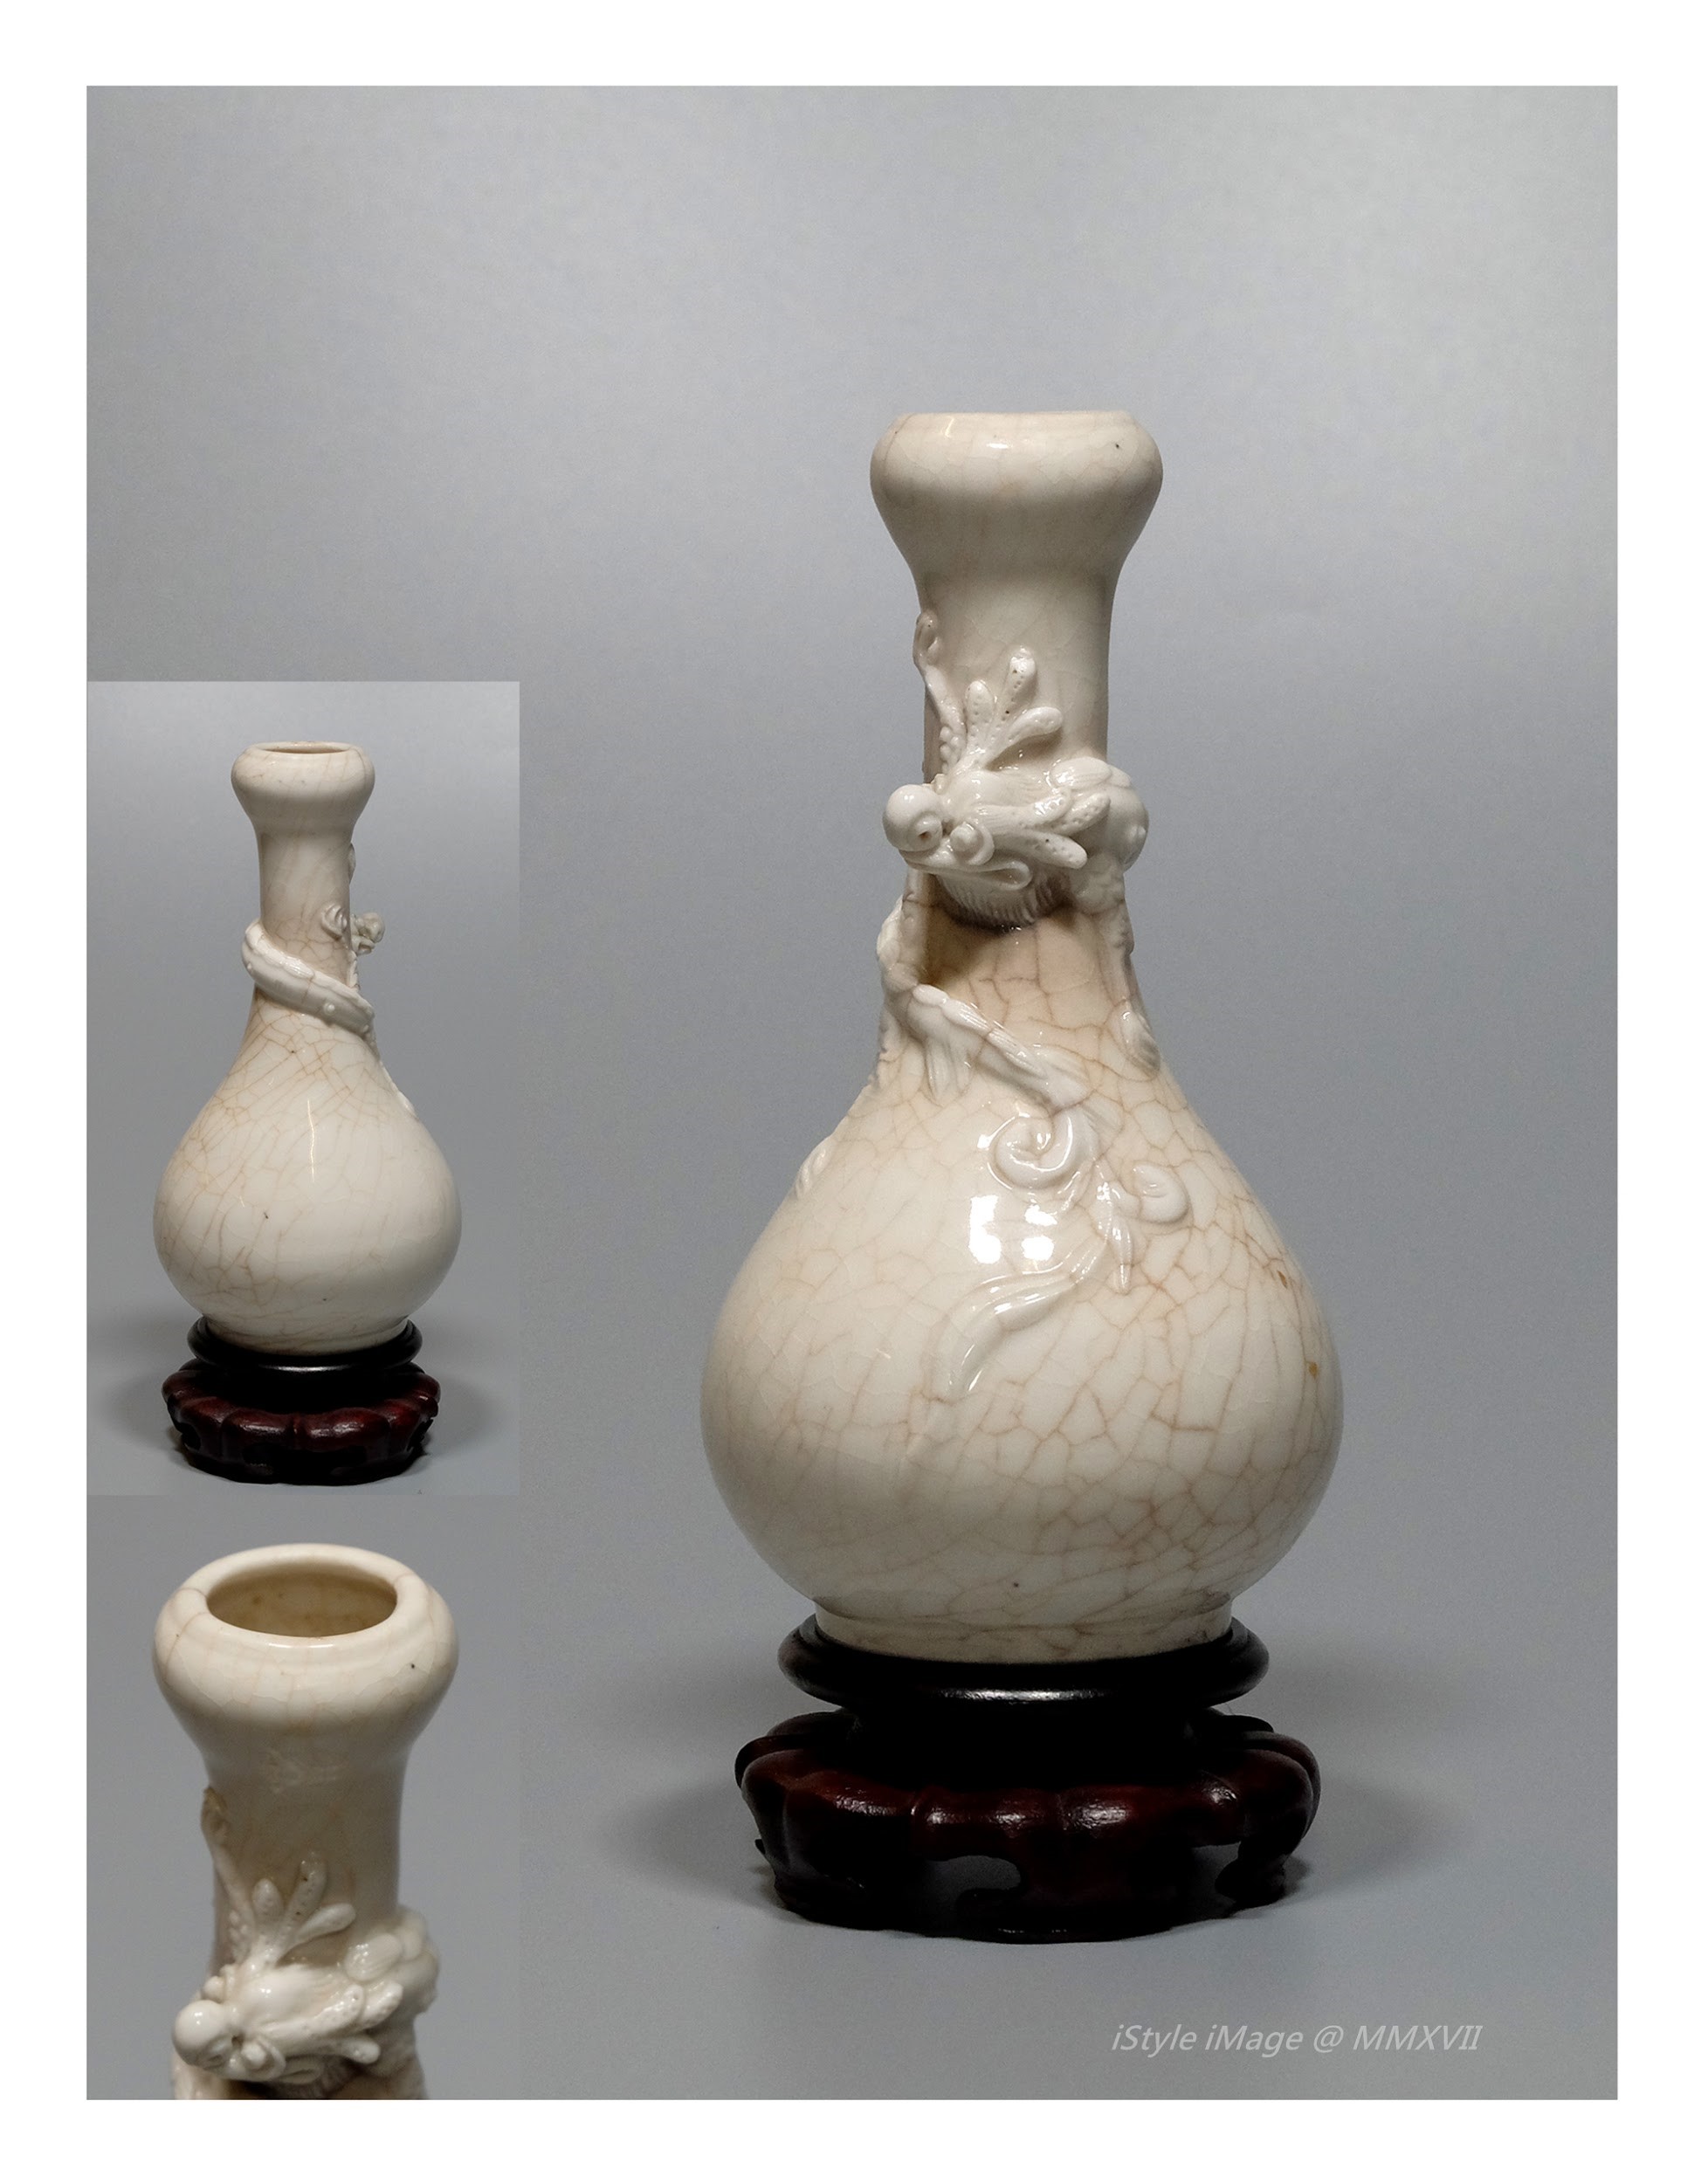 <br><h4>Lot 13 : An Ming style elegance ivory-tinted glaze pear-shaped vase  ( Early 20th century )</h4>
							An elegance pear-shaped form vase, the pear-shaped body gently to an elegant slender neck encircled by a ring chilong with a narrow everted rim, enamelled with ivory-tinted glaze and a network of crackle. [minor flaw]
							<br>Measurements (H) high 15 CM, (W)width 8 CM<br><br><br>典雅的明式象牙色釉梨形花瓶  ( 二十世紀初 )<br>典雅的梨形花瓶，梨形的瓶身輕輕地升到一個優雅細長的頸部，環形的螭龍由狹窄的外翻邊緣包圍著頸部與瓶身，象牙色的搪瓷釉配壁裂紋帶著典雅的風格。  [微小瑕疵]<br>尺寸(H)高 15 厘米,  (W)濶8 厘米